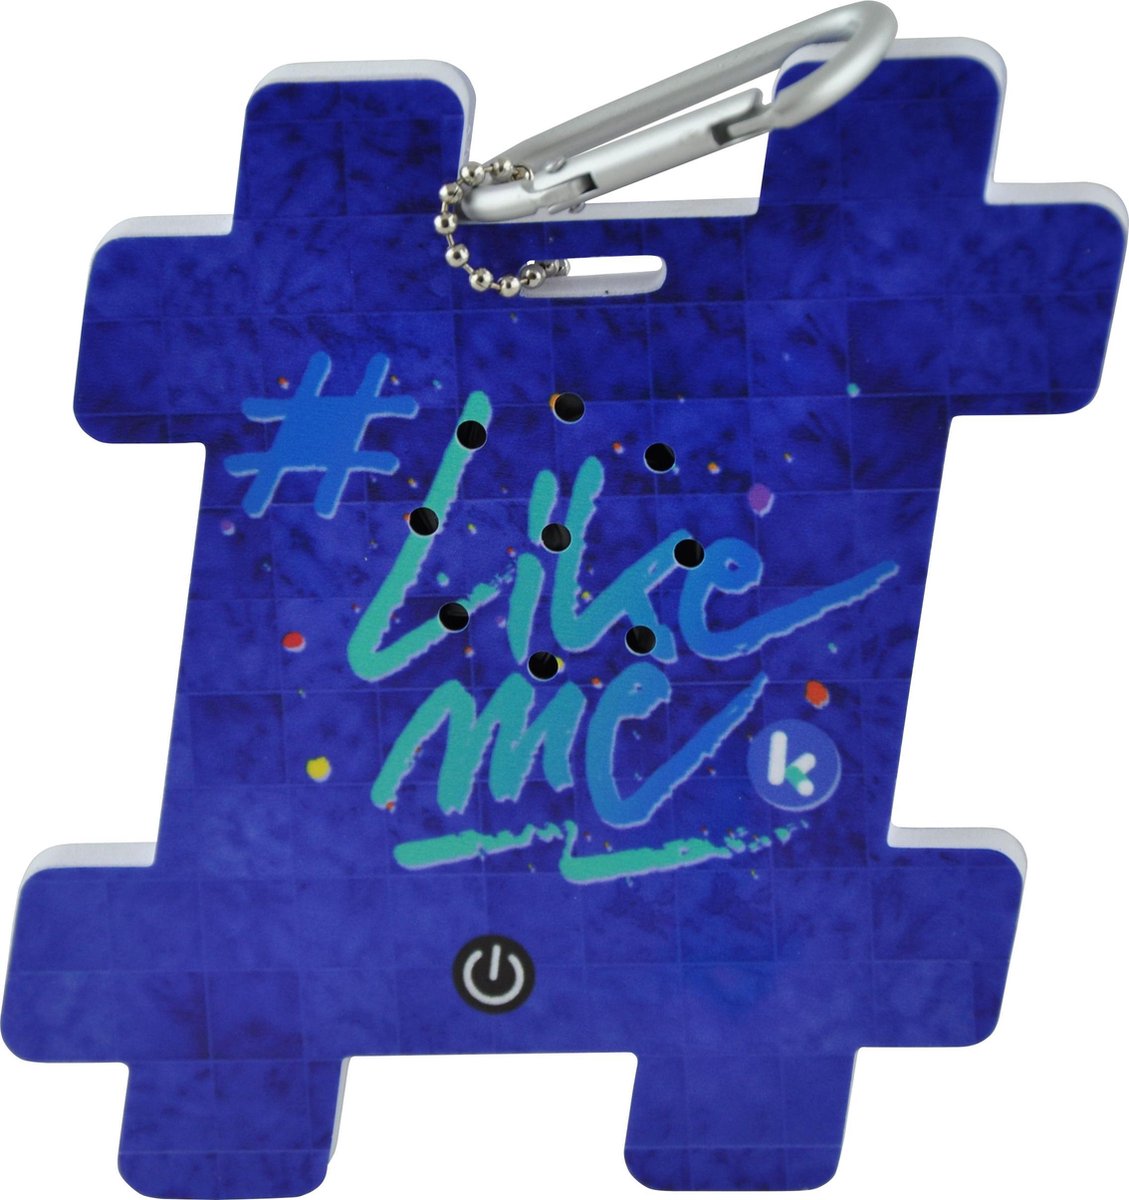 Didak Play MUY pop backpack speaker - like me - blauw